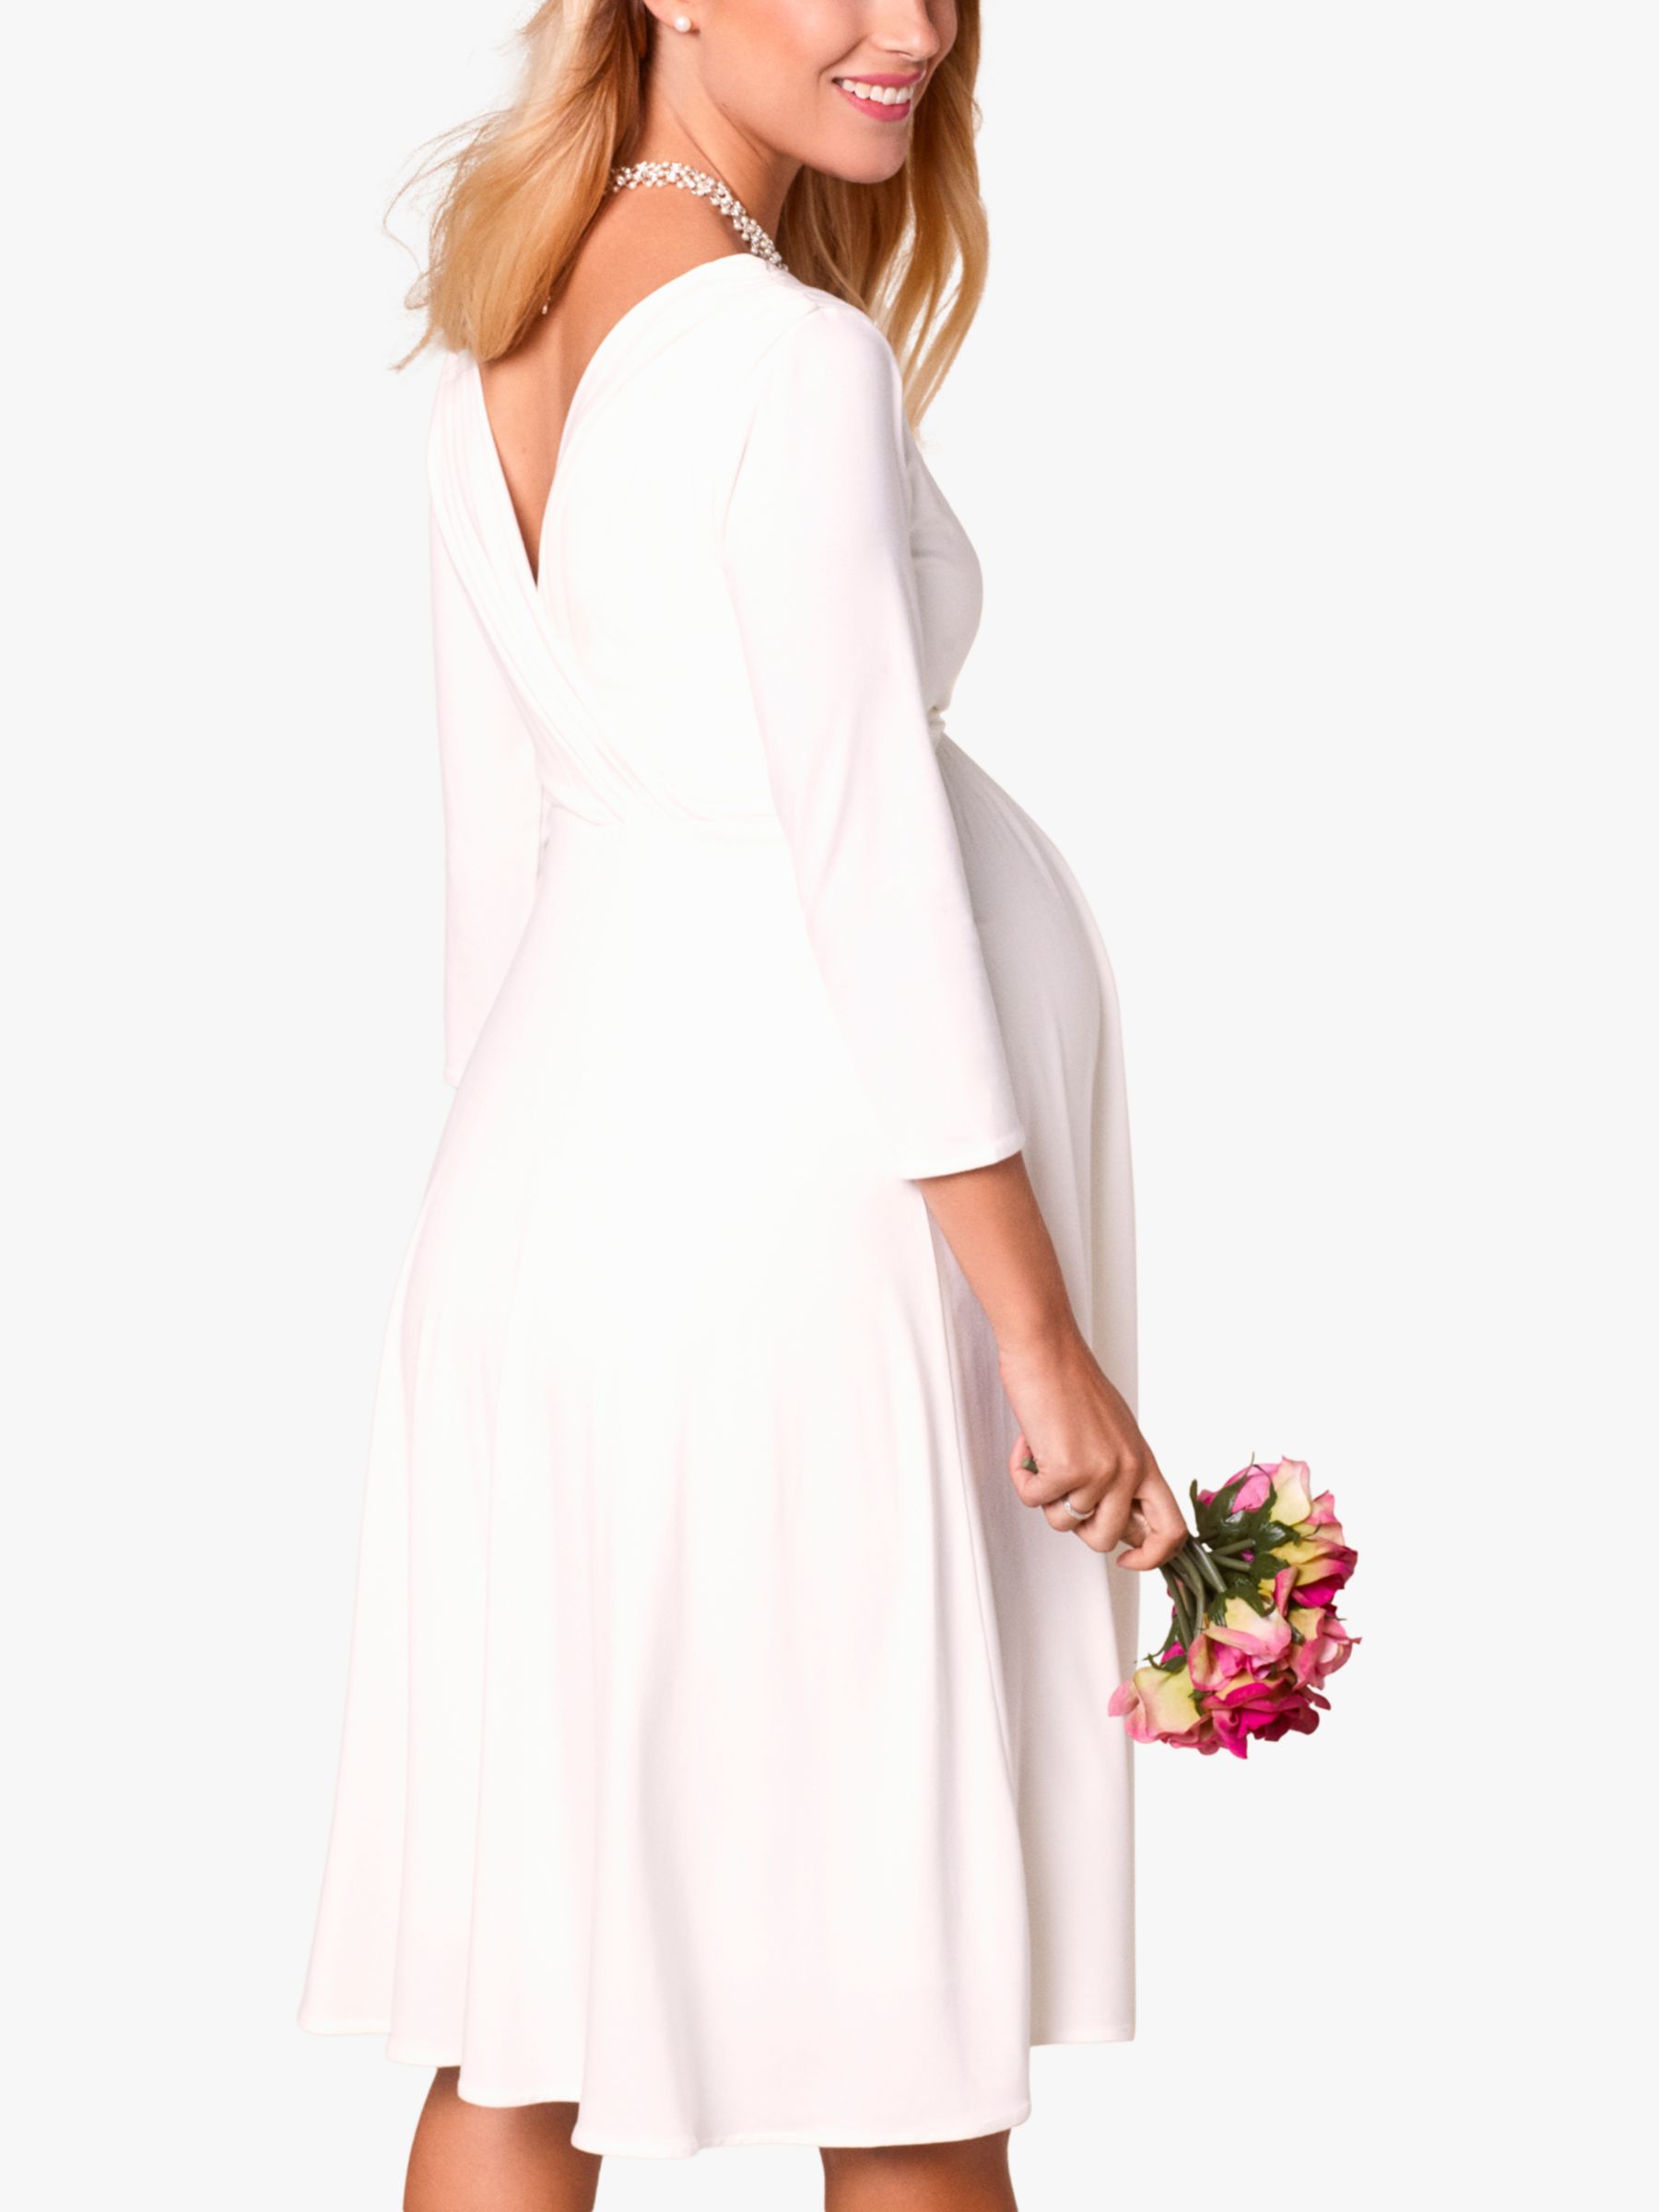 Tiffany Rose Willow Maternity Short Wedding Dress, Ivory, 6-8